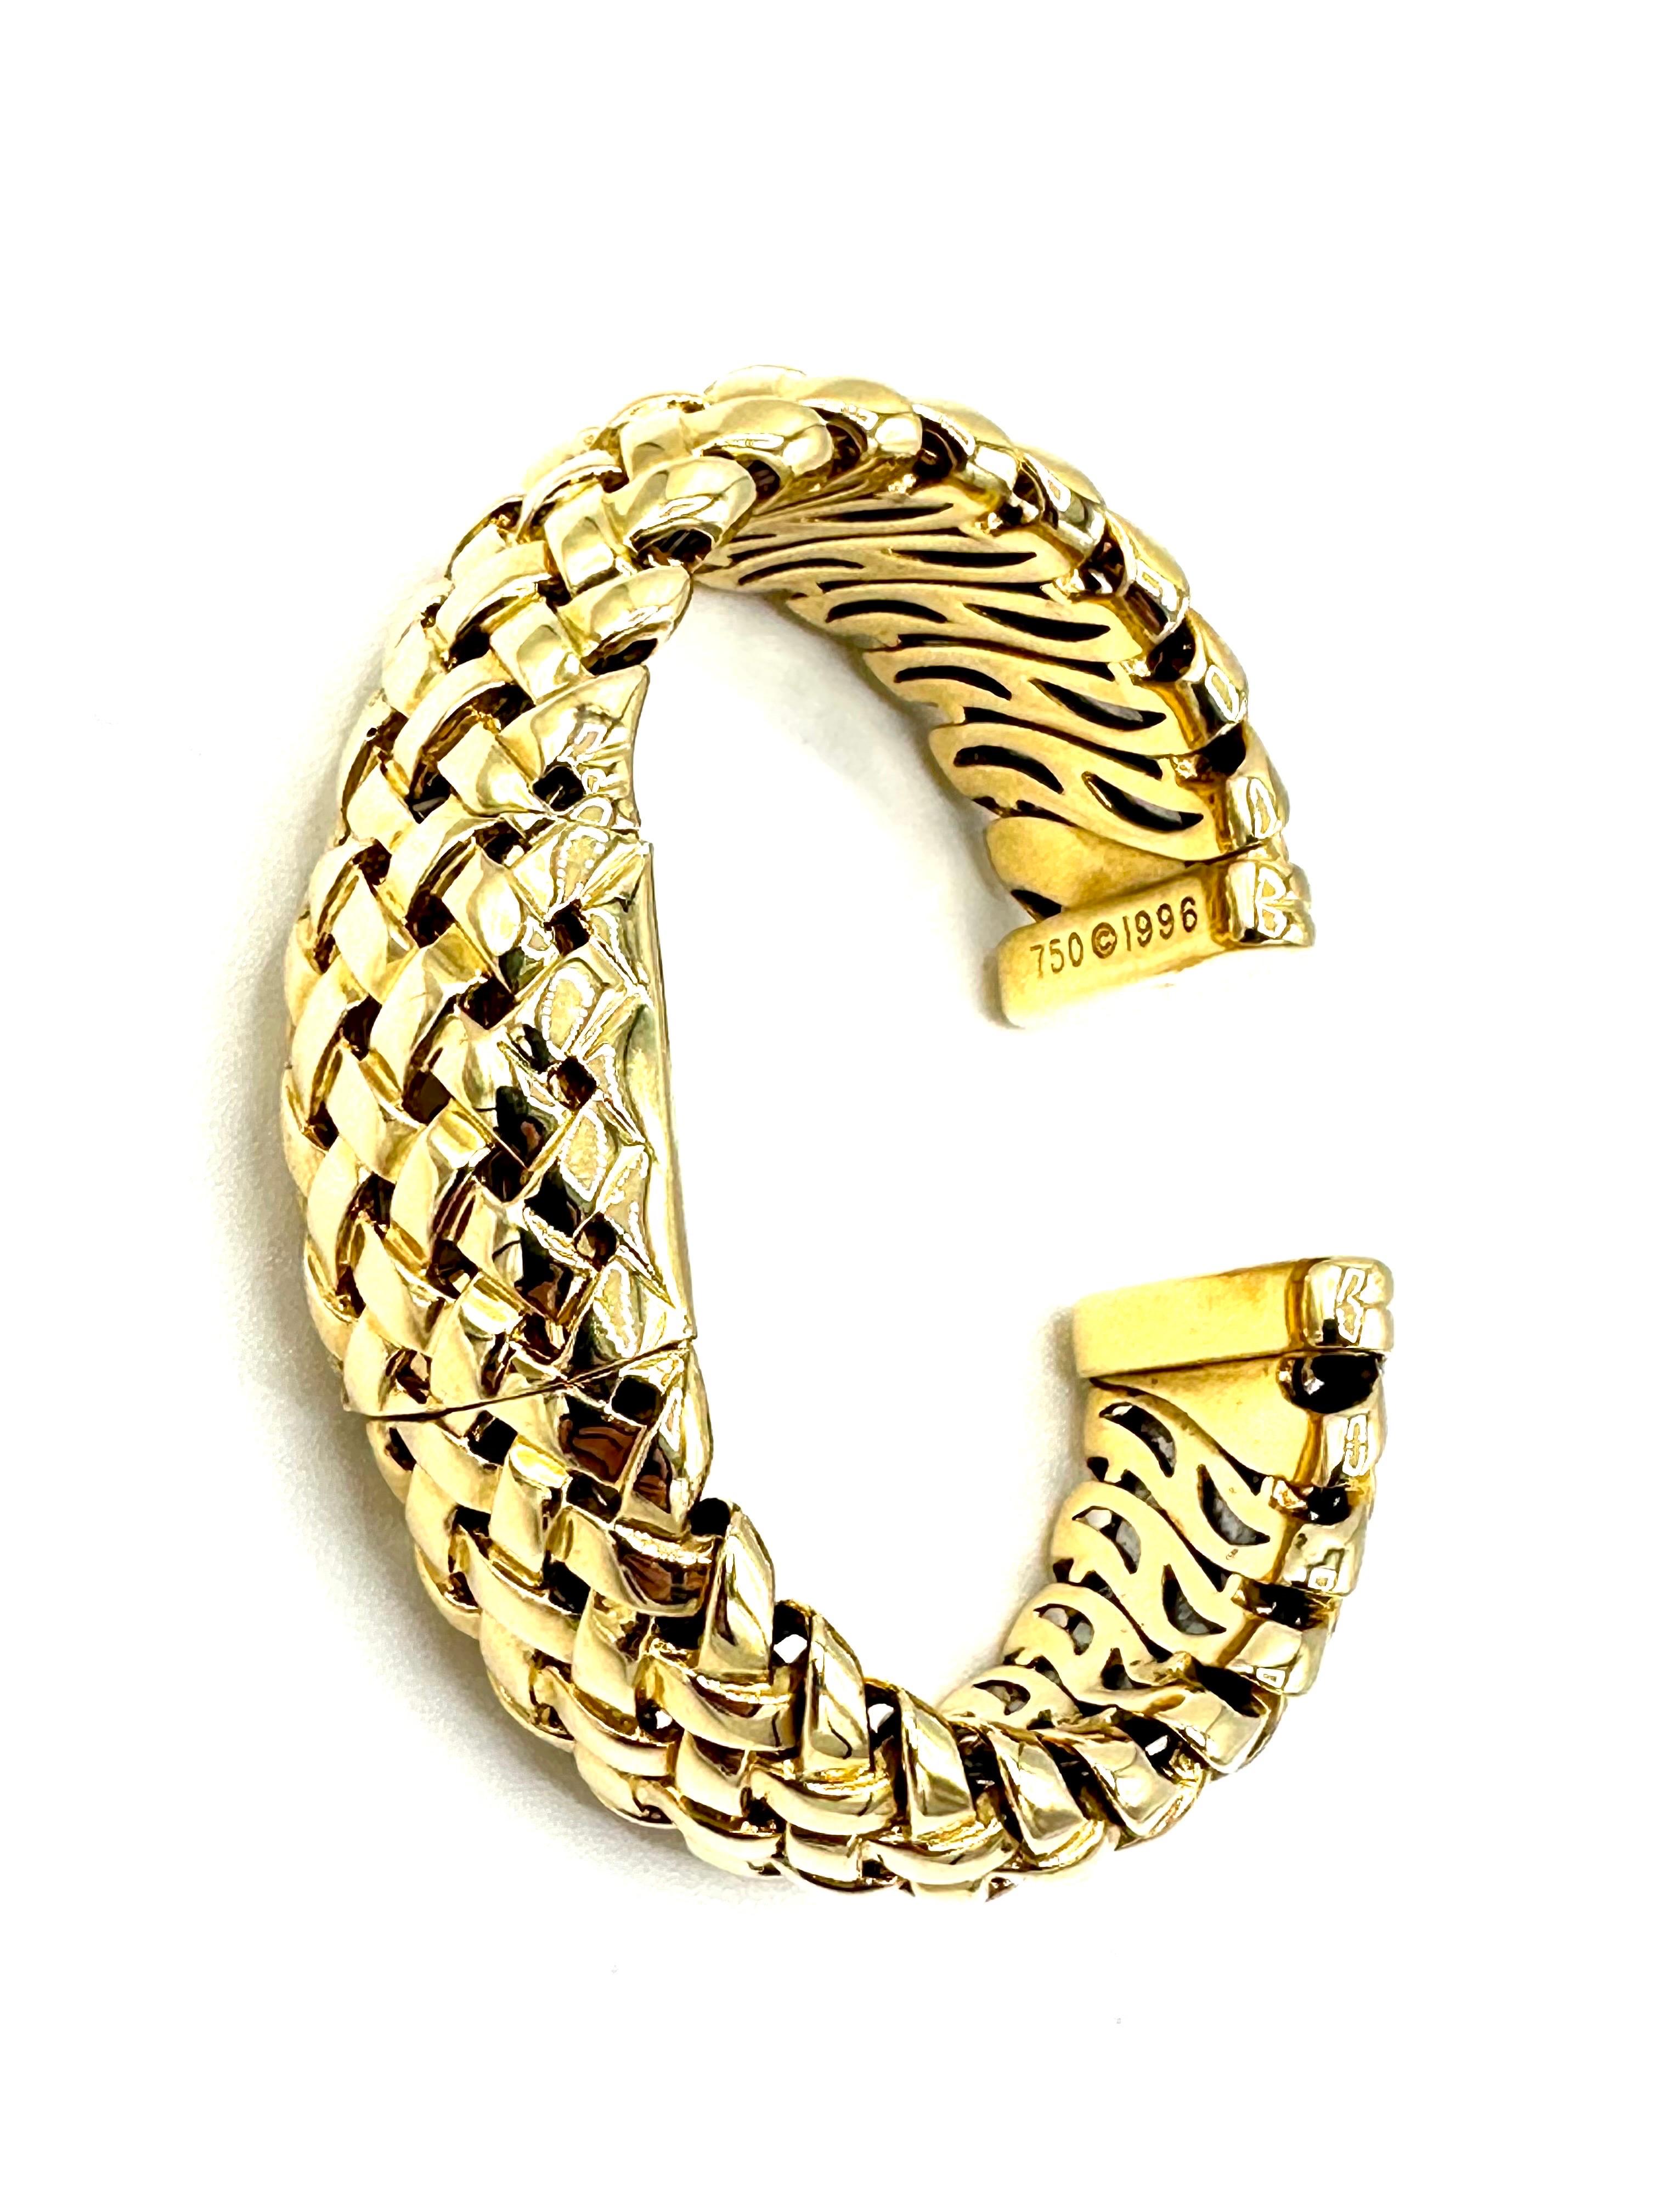 Tiffany & Co. 18k Yellow Gold Basket Weave Bangle Bracelet Watch For Sale 1